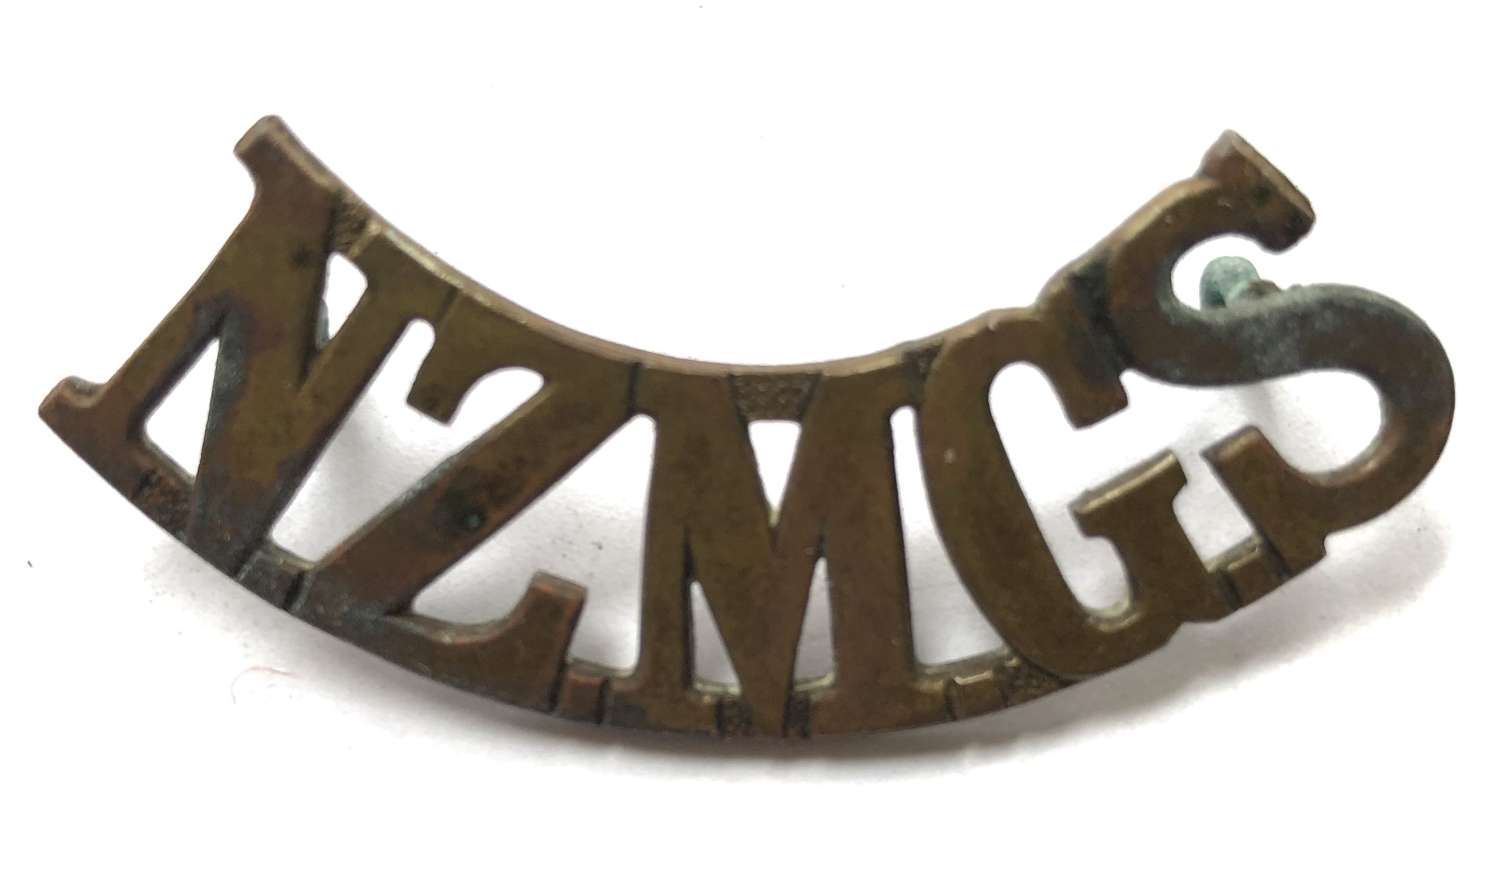 NZMGS WW1 New Zealand Machine Gun Section shoulder title, maker marked